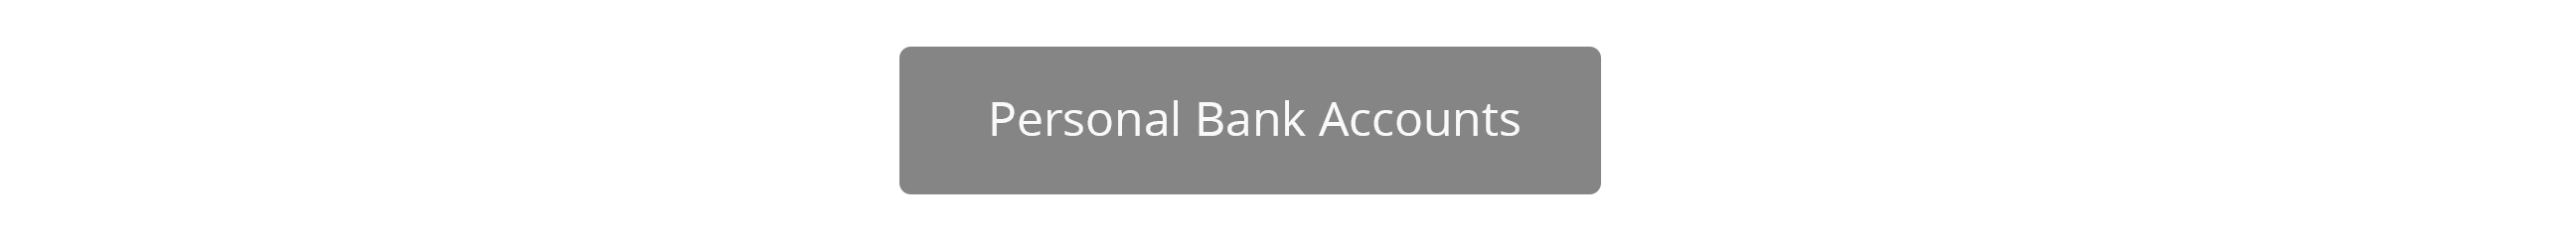 Personal Bank Accounts